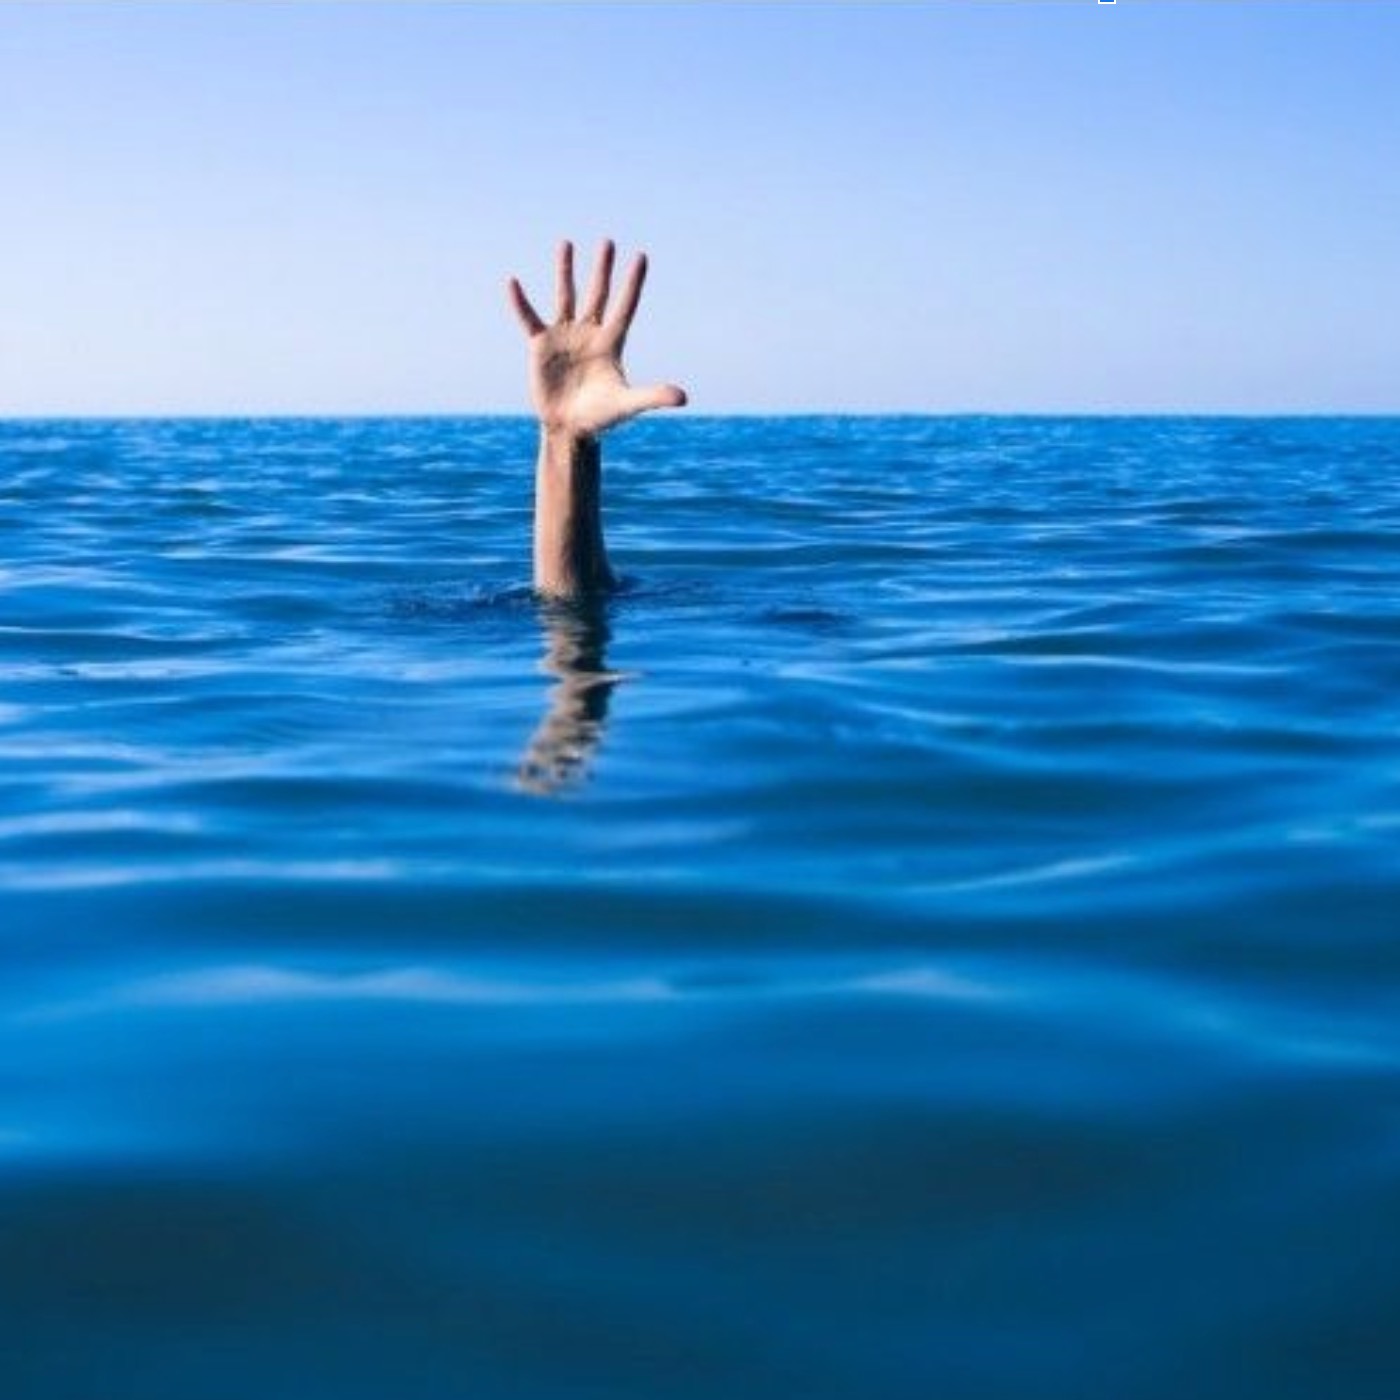 person drowning raising hand